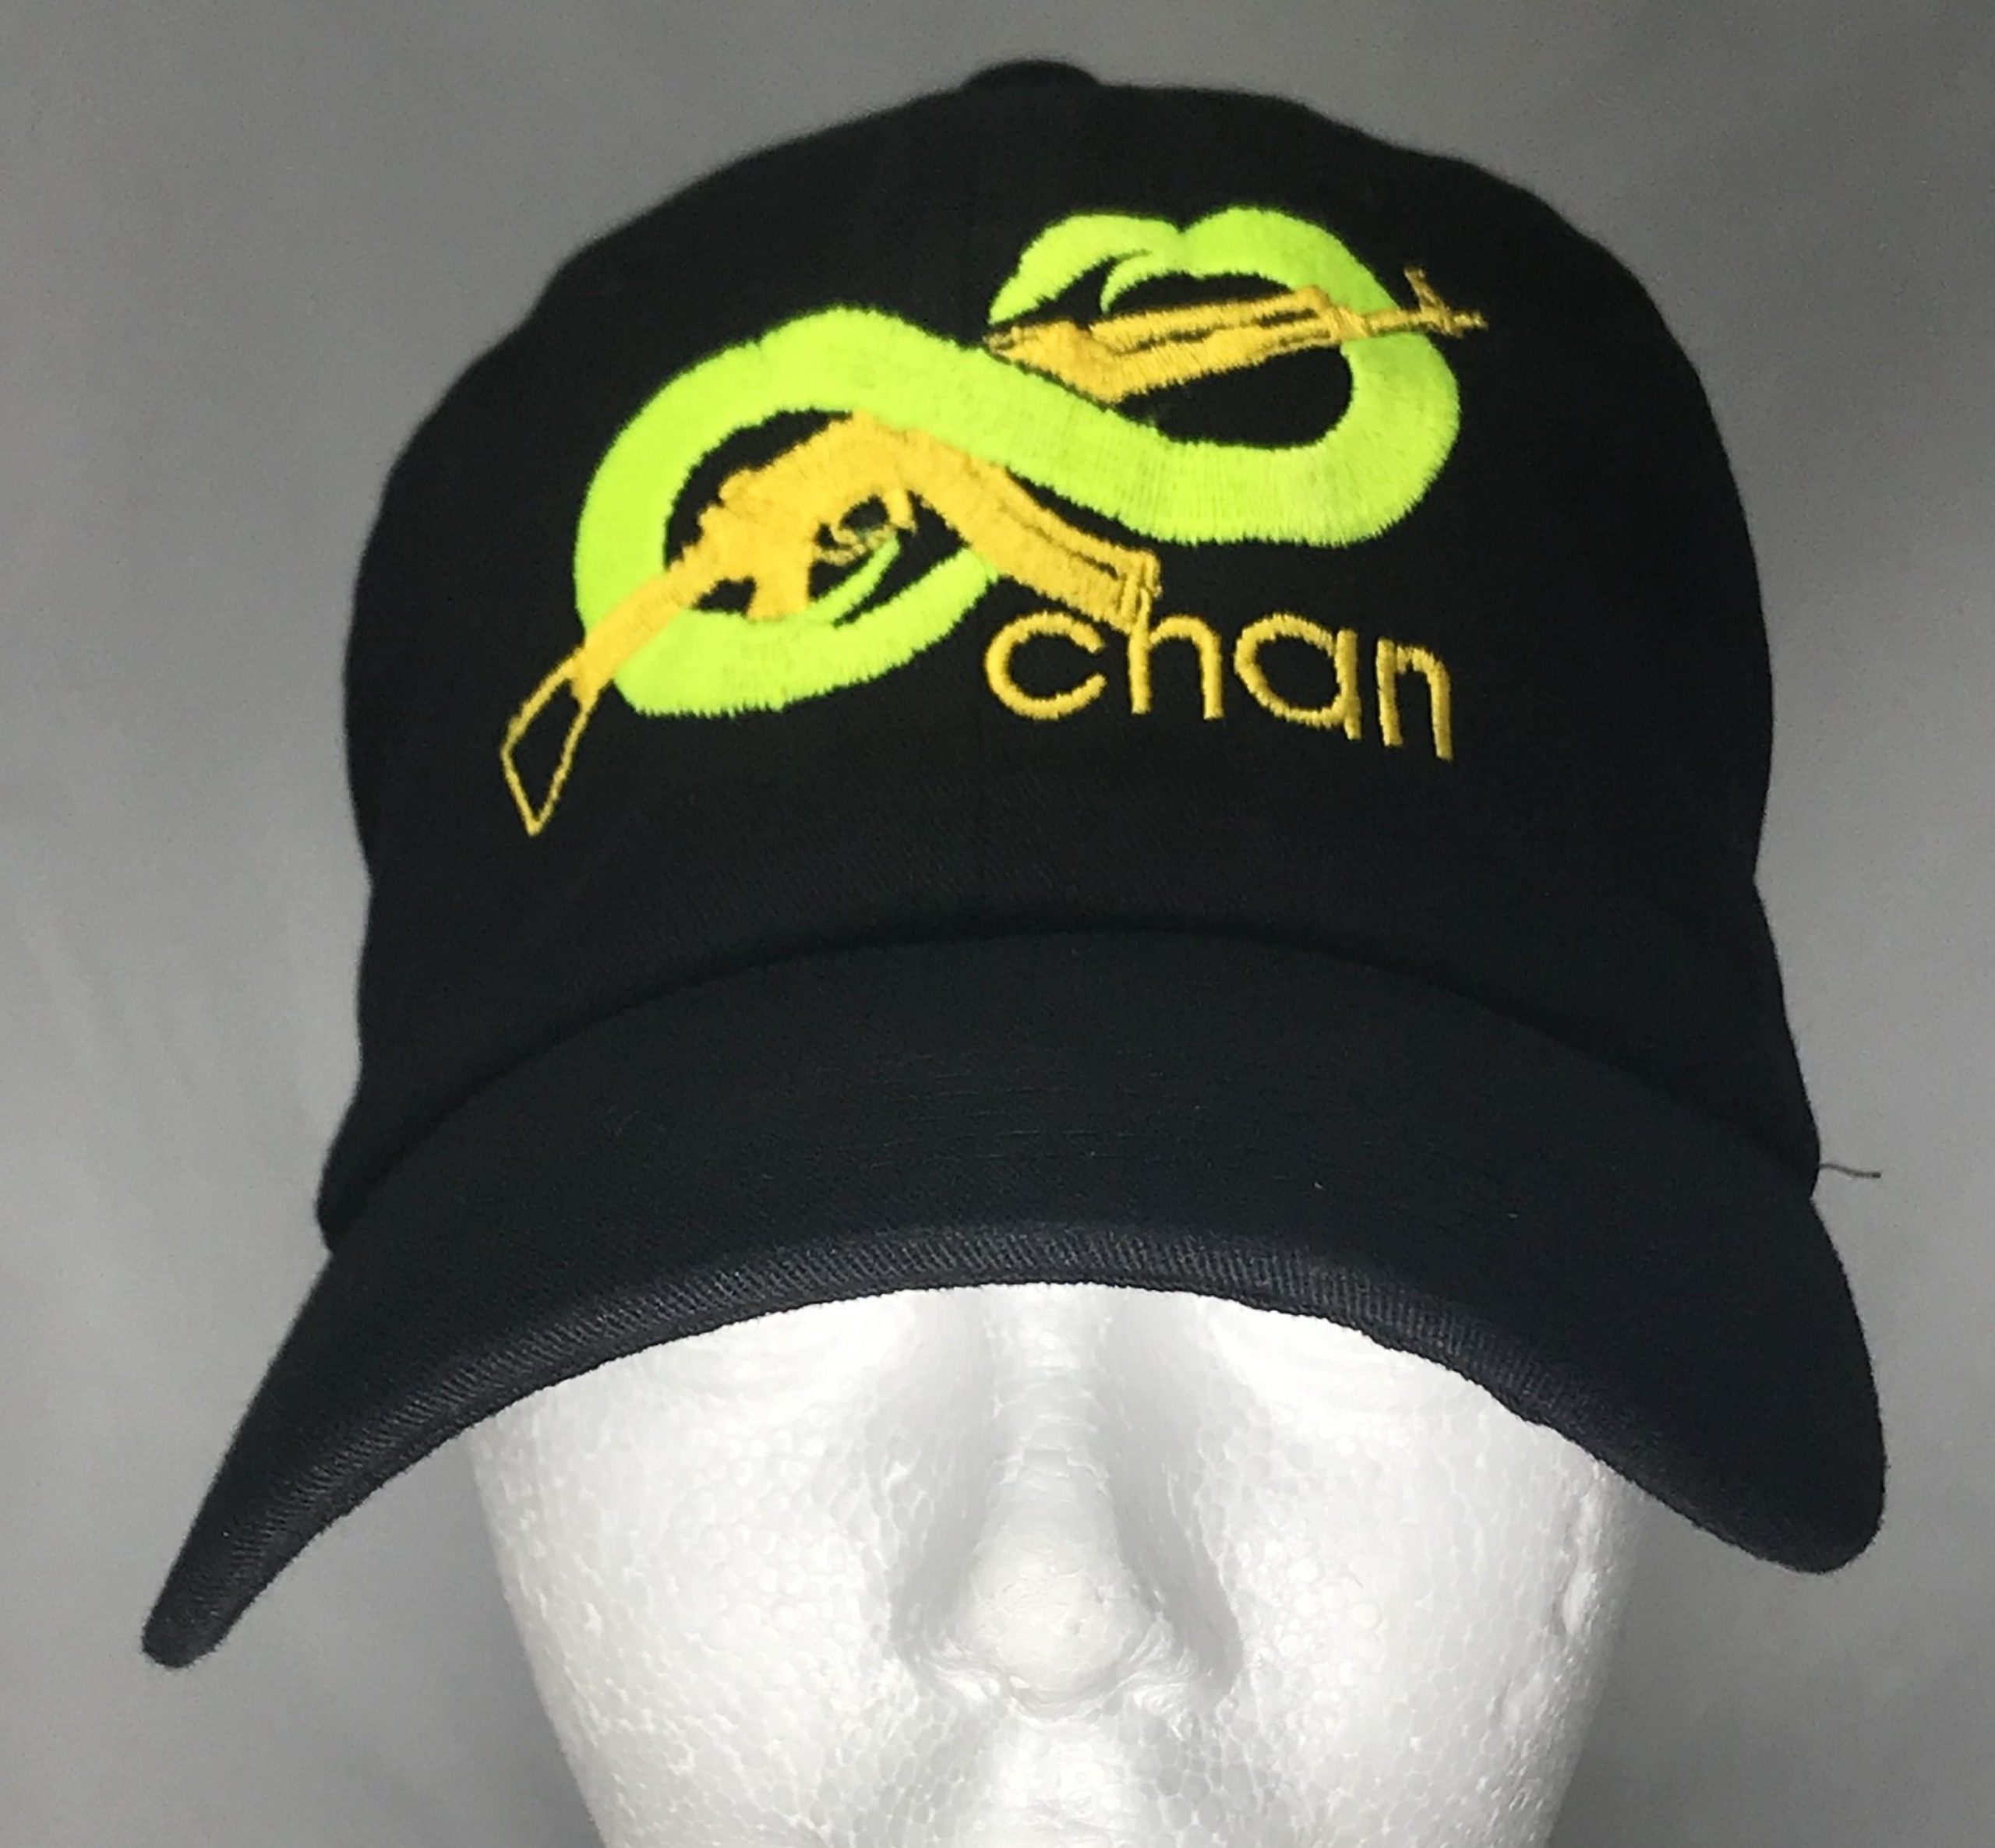 8chan hat glows in the dark